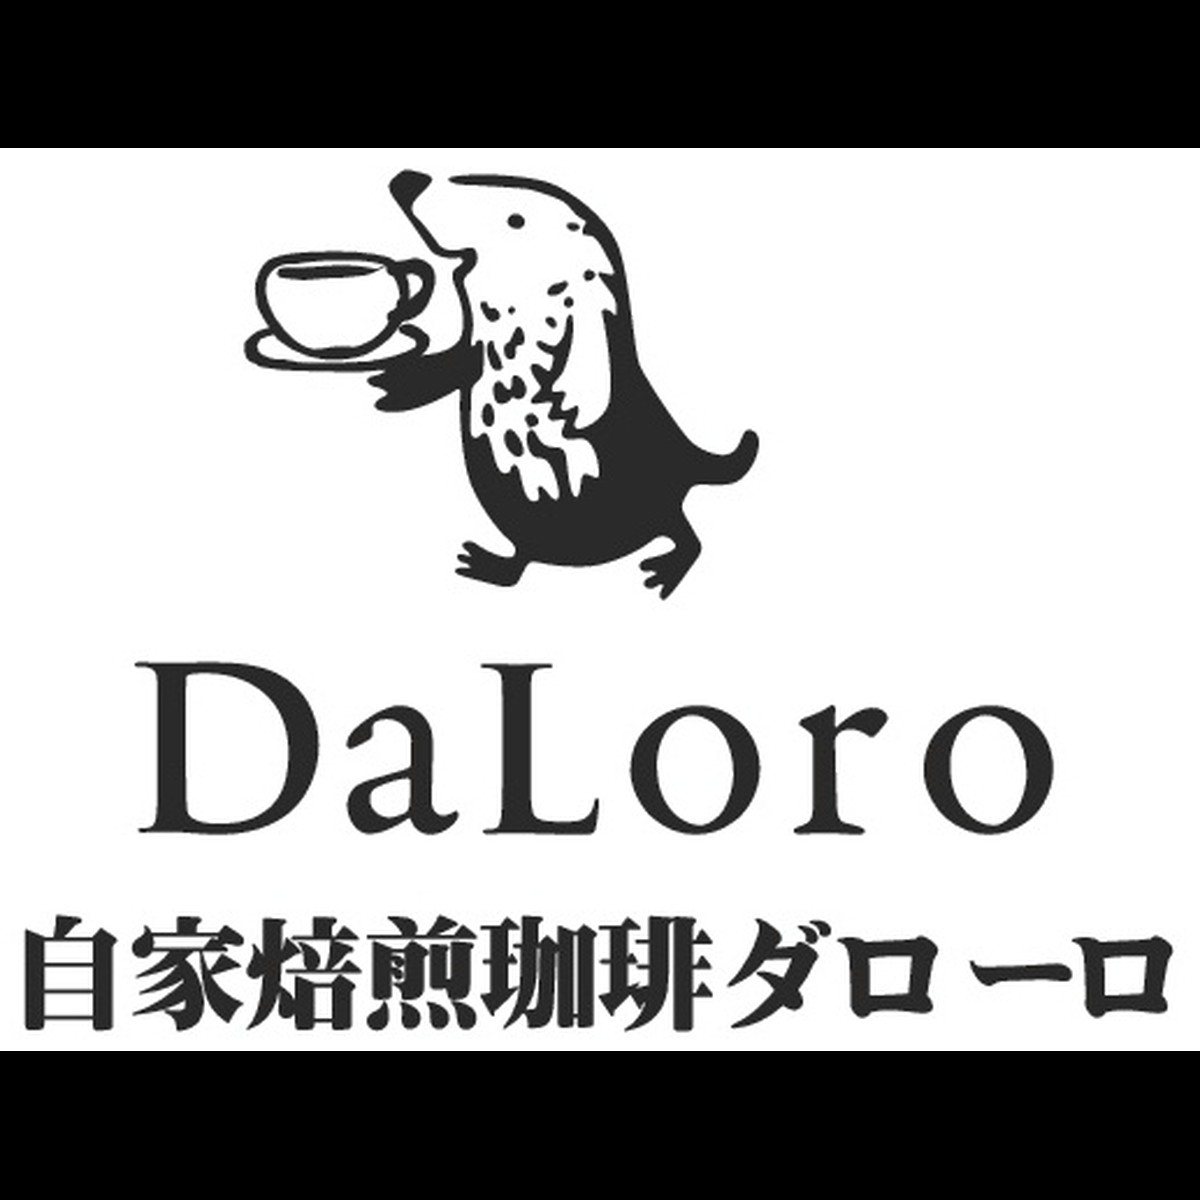 About 自家焙煎珈琲daloro ダローロ